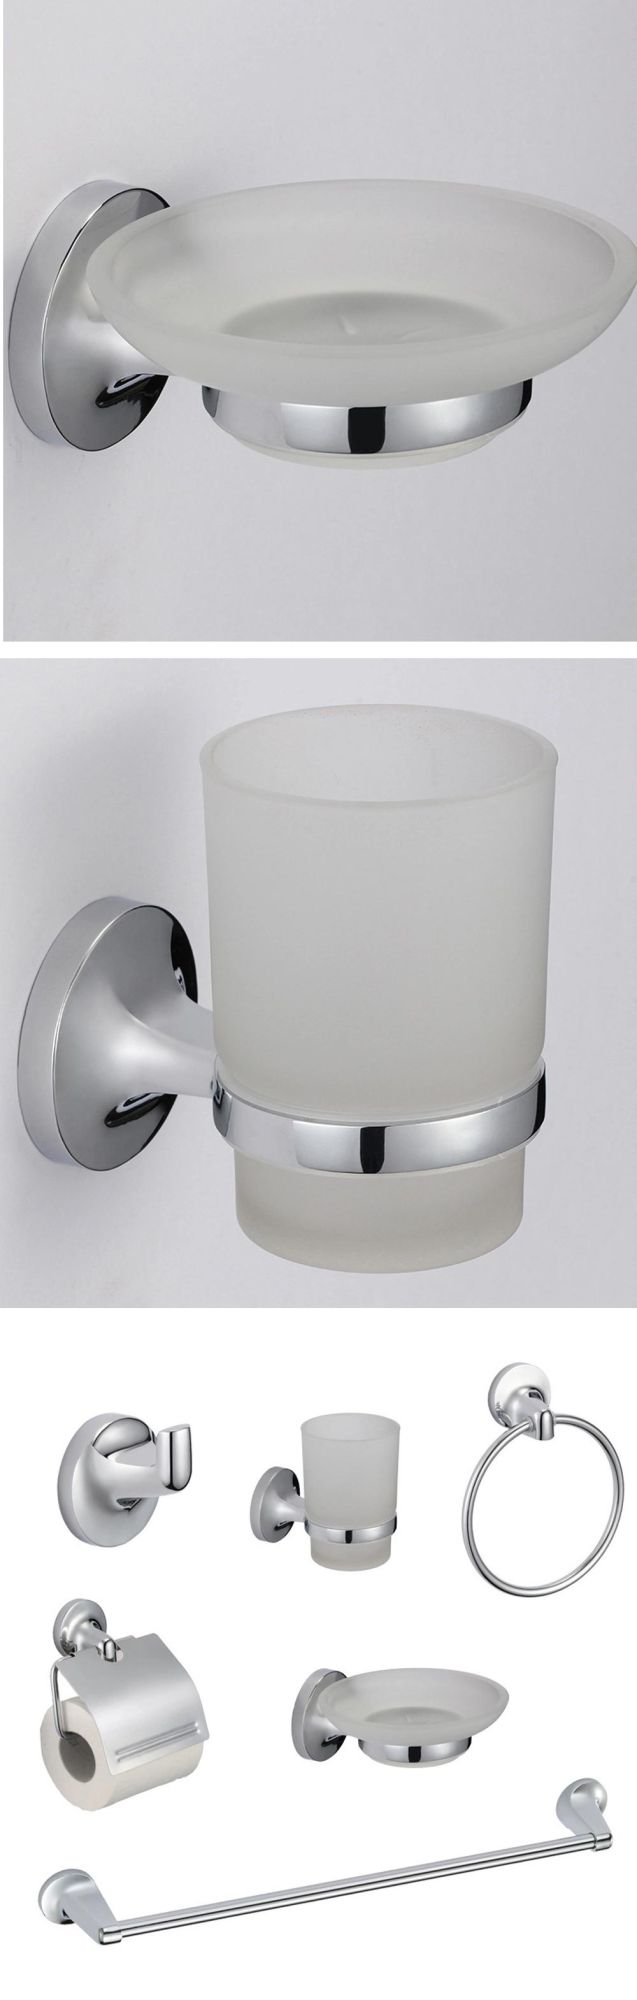 2022 New Bathroom Toilet Paper Holder Accessories 6sets Economic Series Zinc Alloy for Hotel Public Restroom